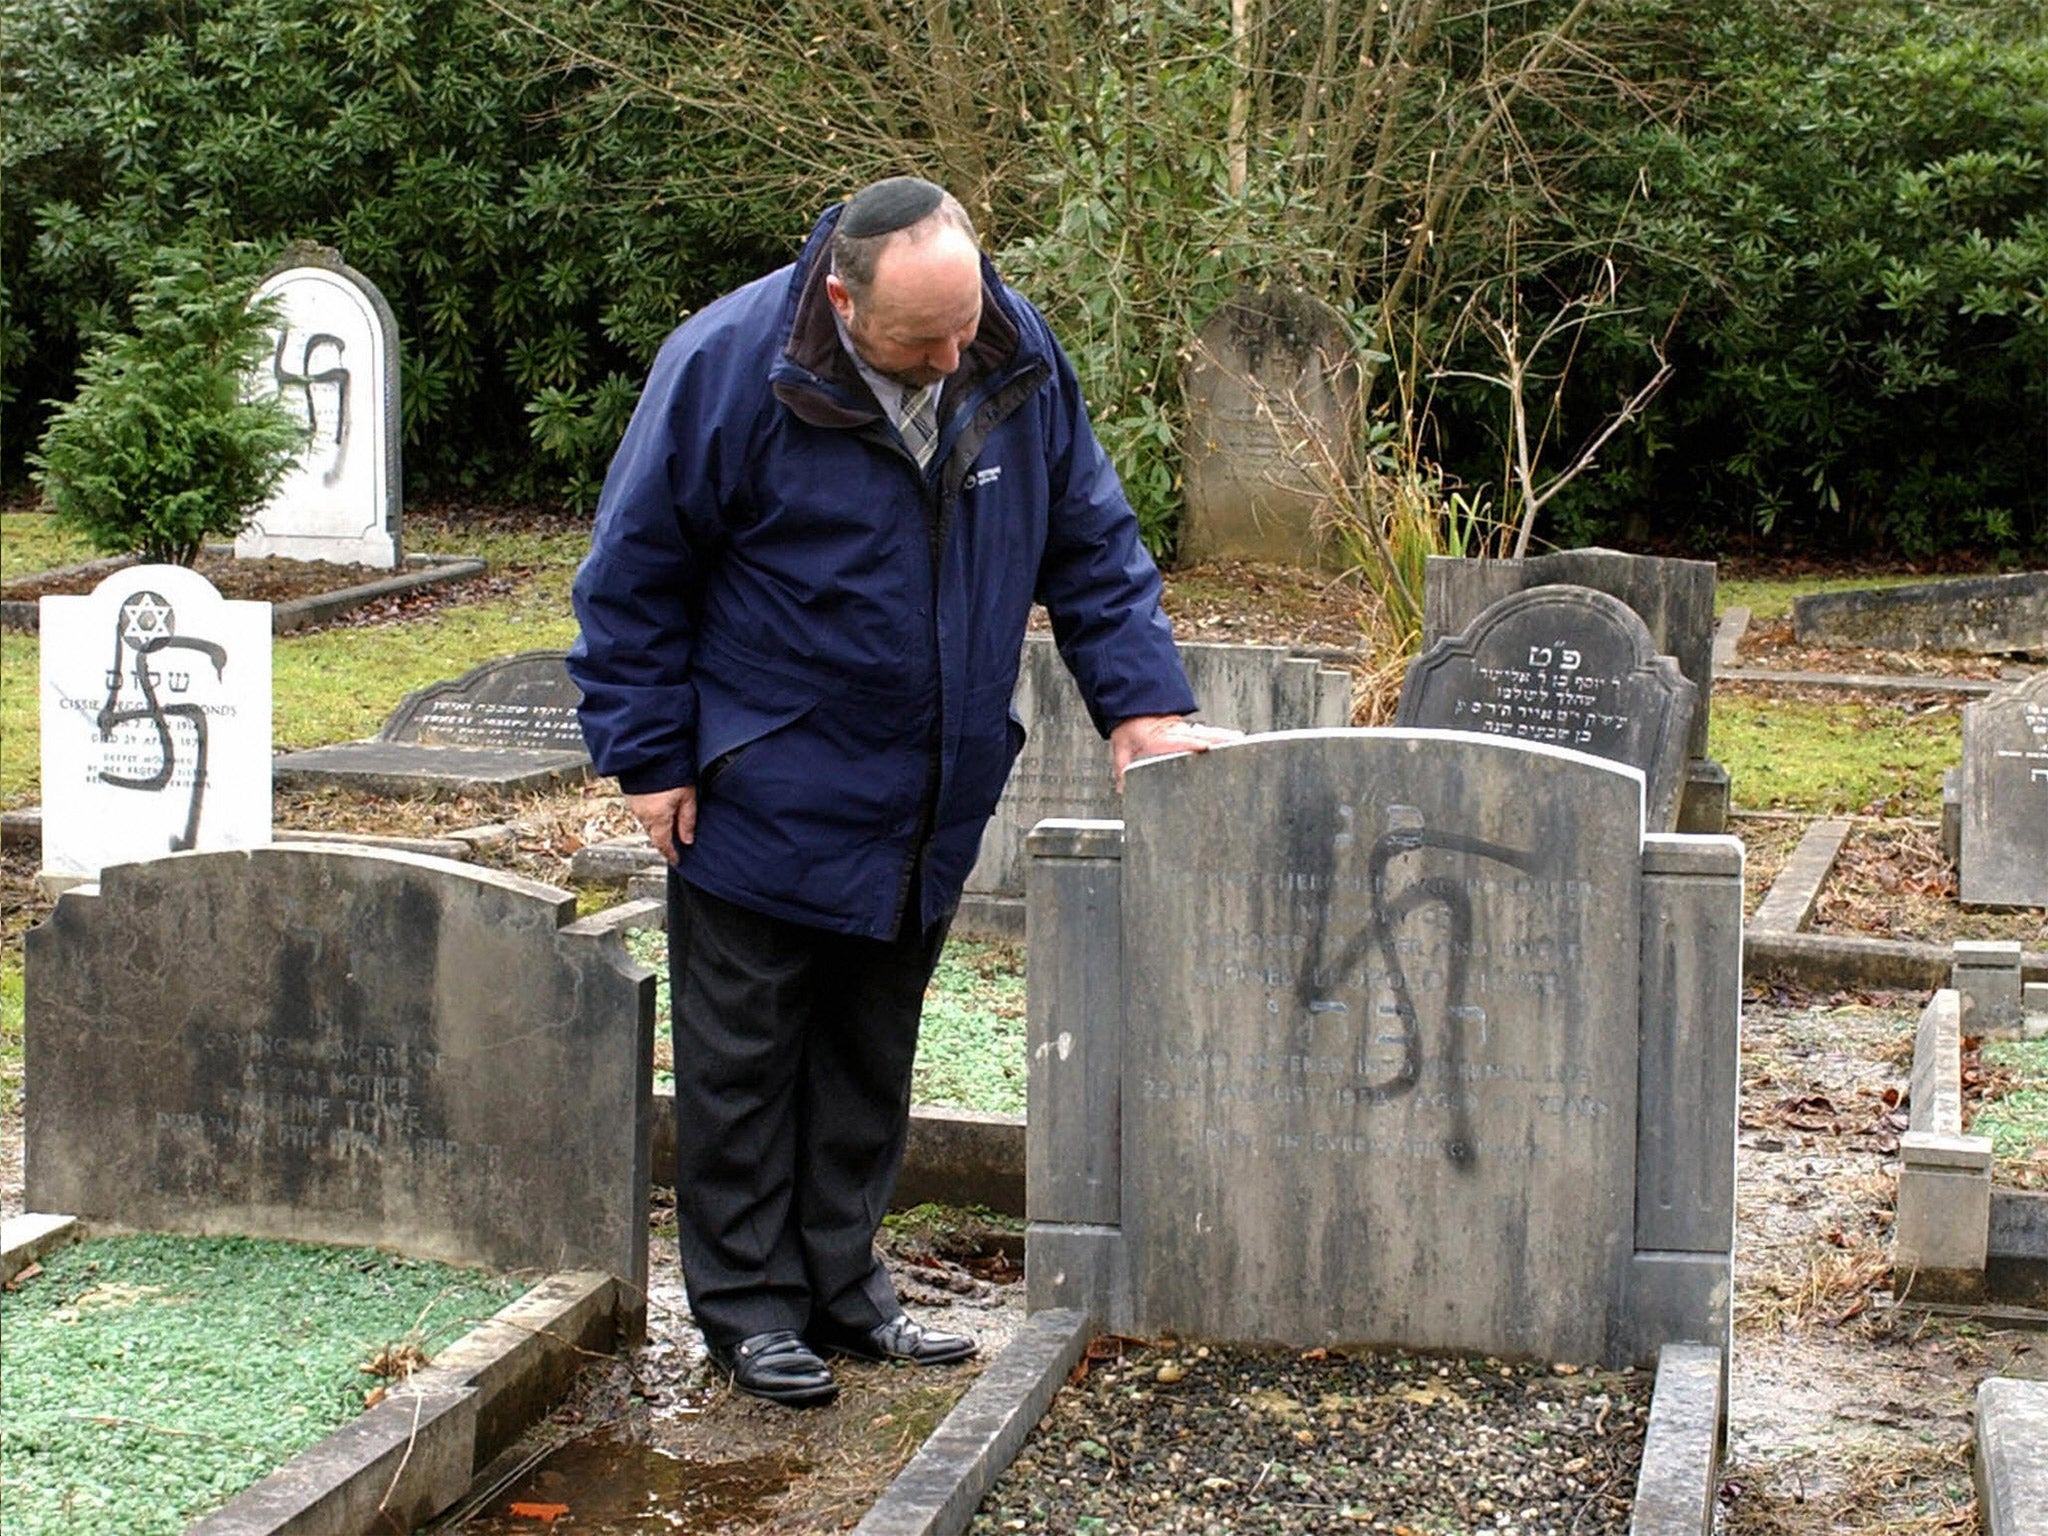 Graves vandalised at a Jewish Cemetery in Aldershot, Hampshire, in 2005